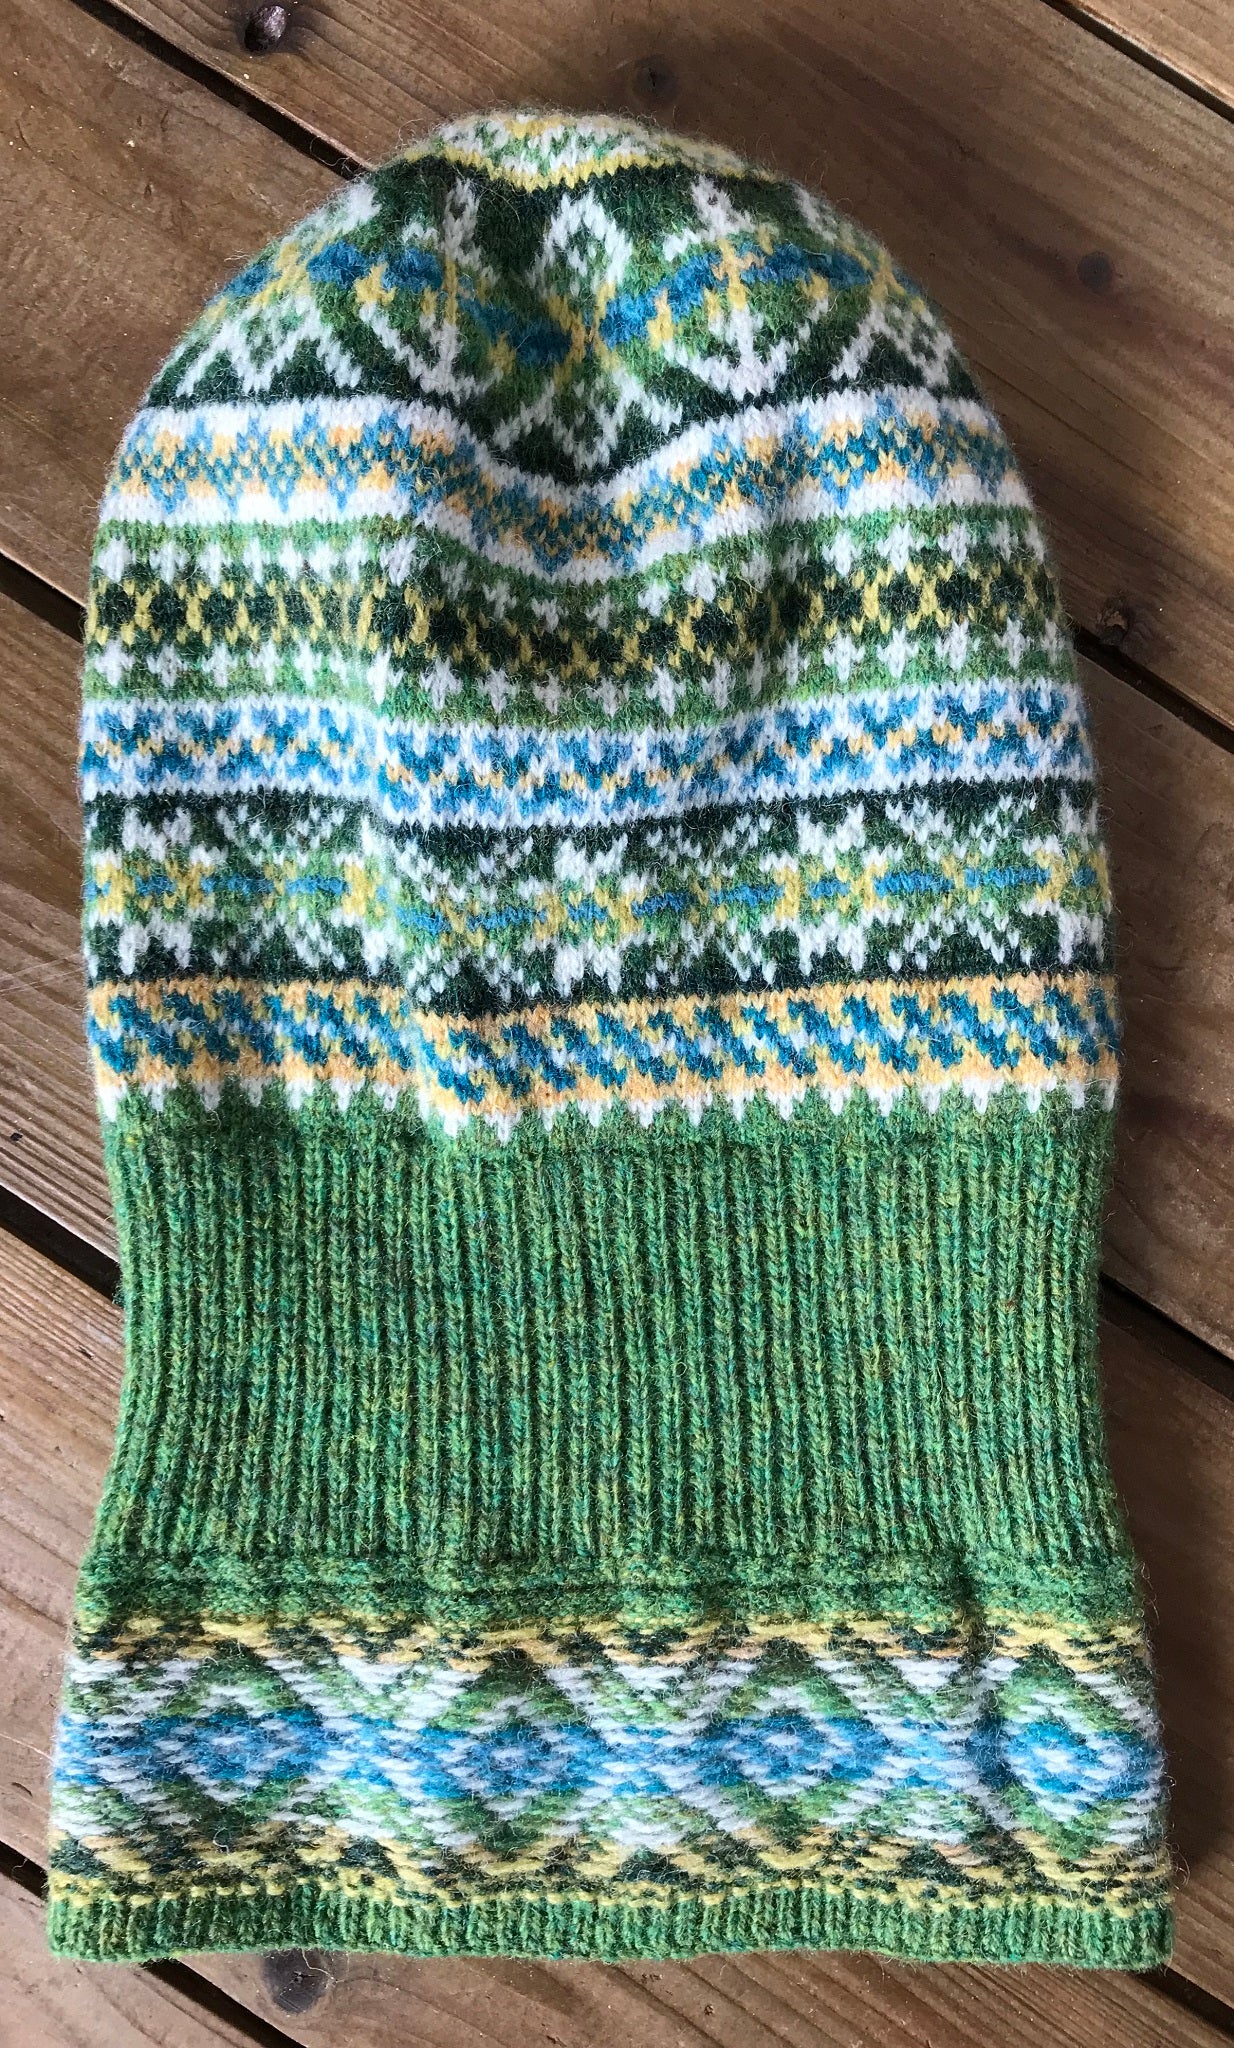 Knitting Jenny Pattern 23: Fair Isle Inspired Fisherman’s Kep and Design Workbook